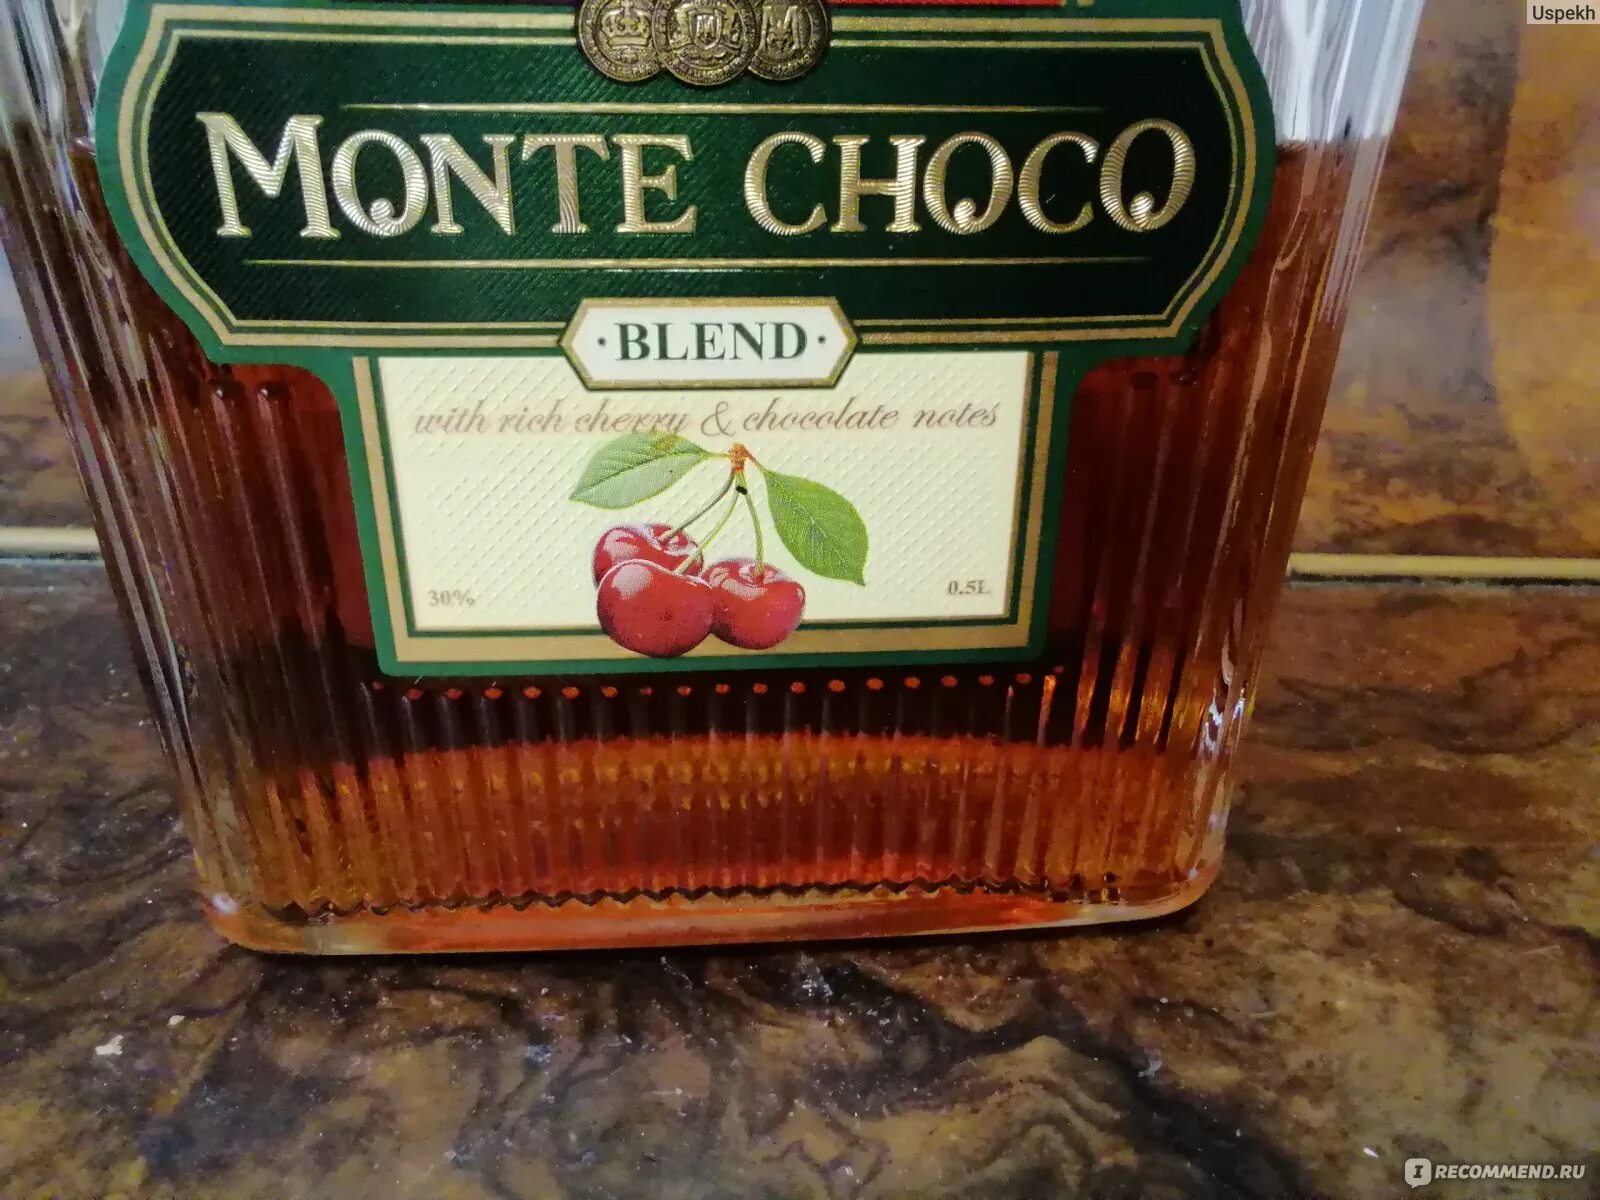 Коктейль монте шоко. Монте Чоко Blend. Монте Чоко вишня. Монте Чоко коньяк вишня. Коктейль Monte Choco.